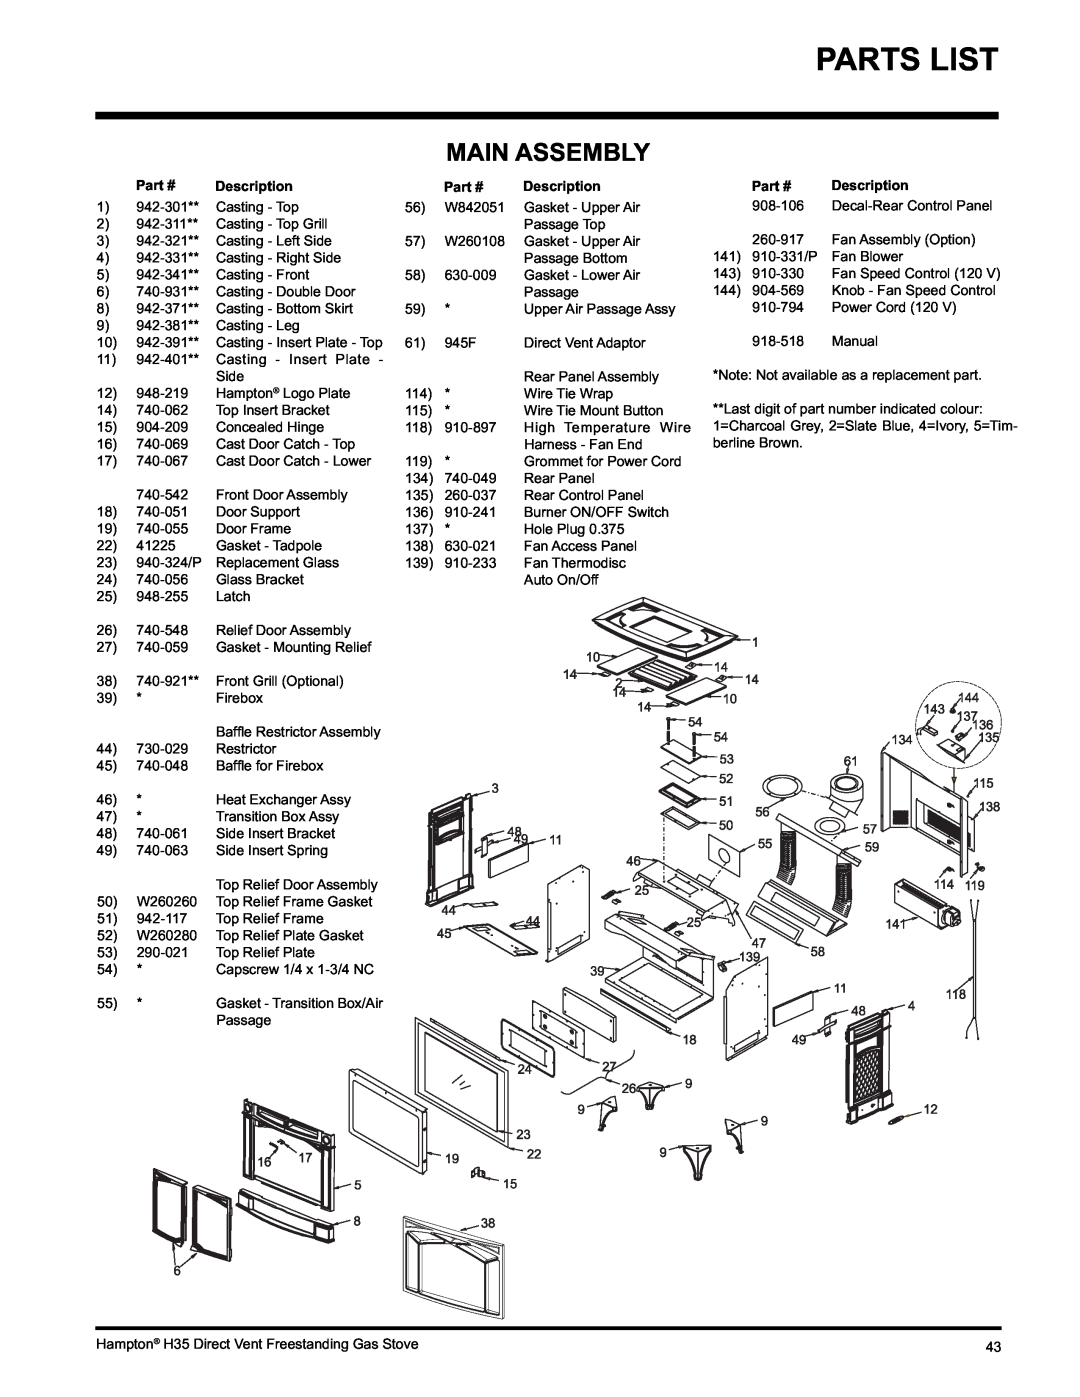 Hampton Direct H35-LP1, H35-NG1 installation manual Parts List, Main Assembly, Description 